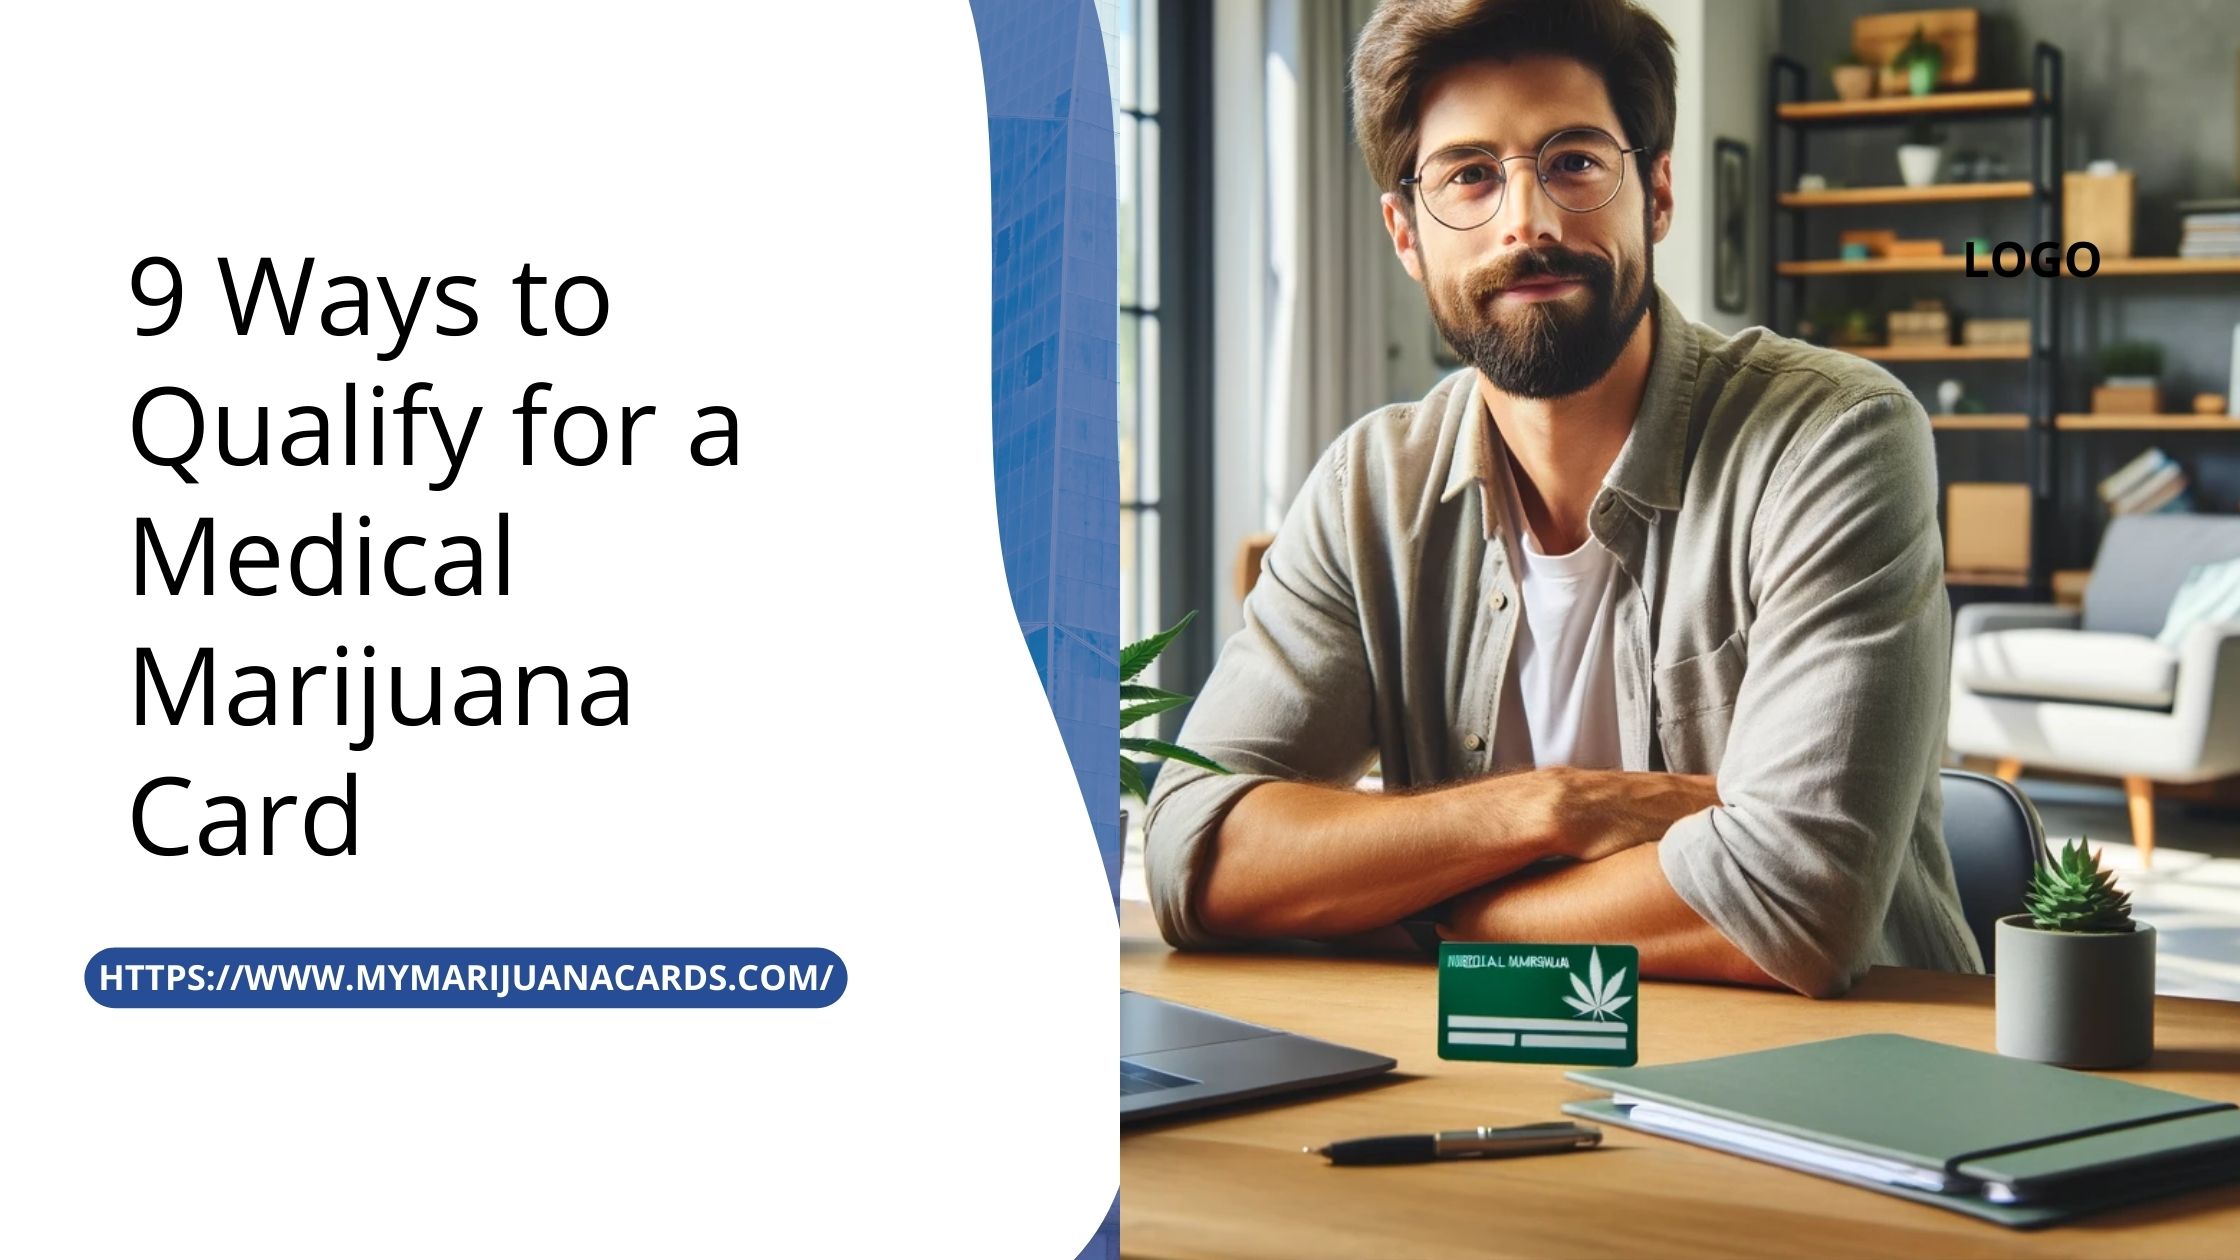 9 Ways to Qualify for a Medical Marijuana Card